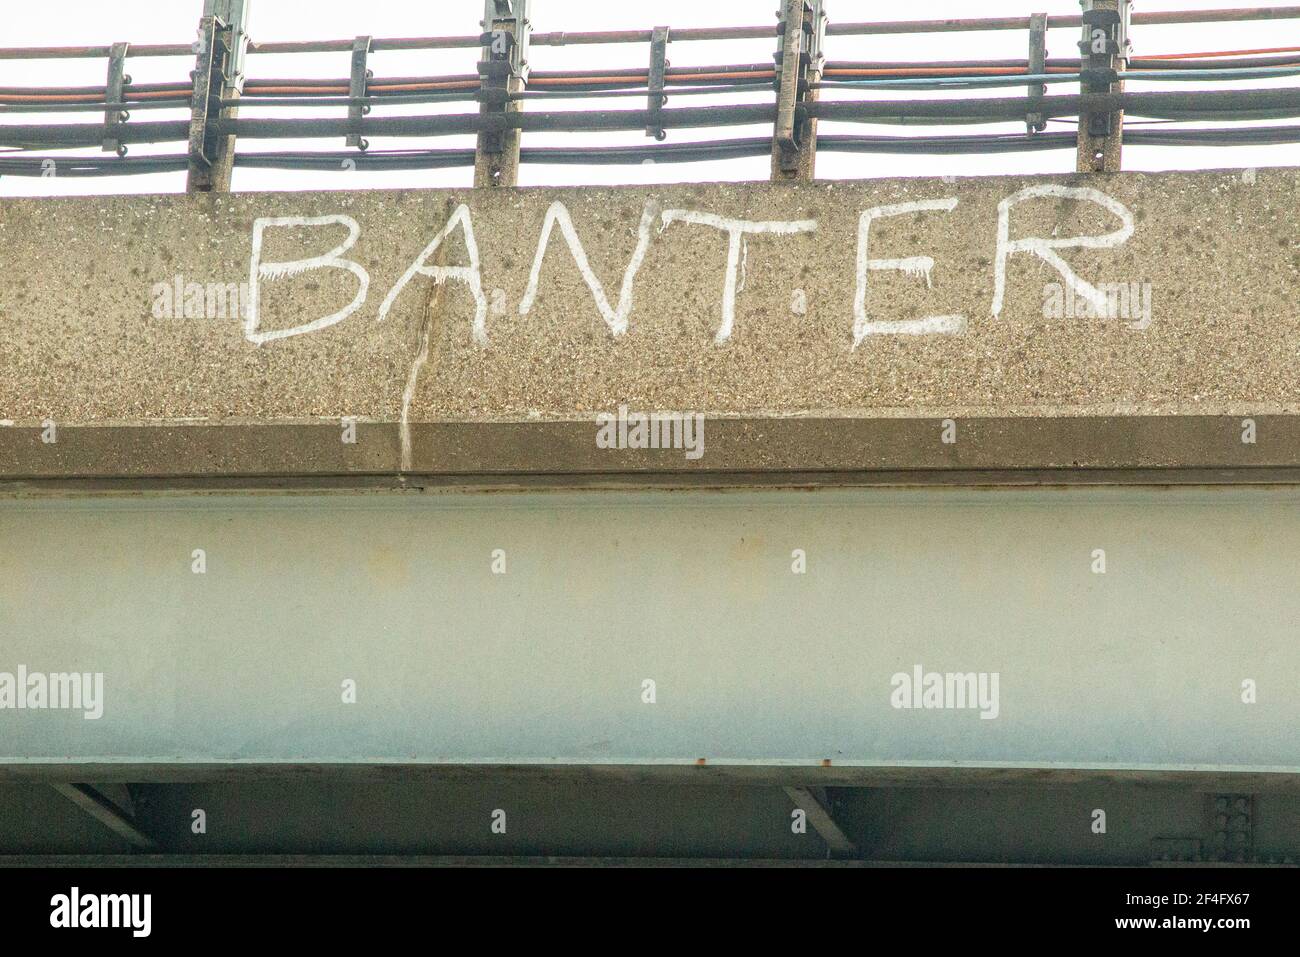 La parola "Banter" scritta su un ponte autostradale Foto Stock